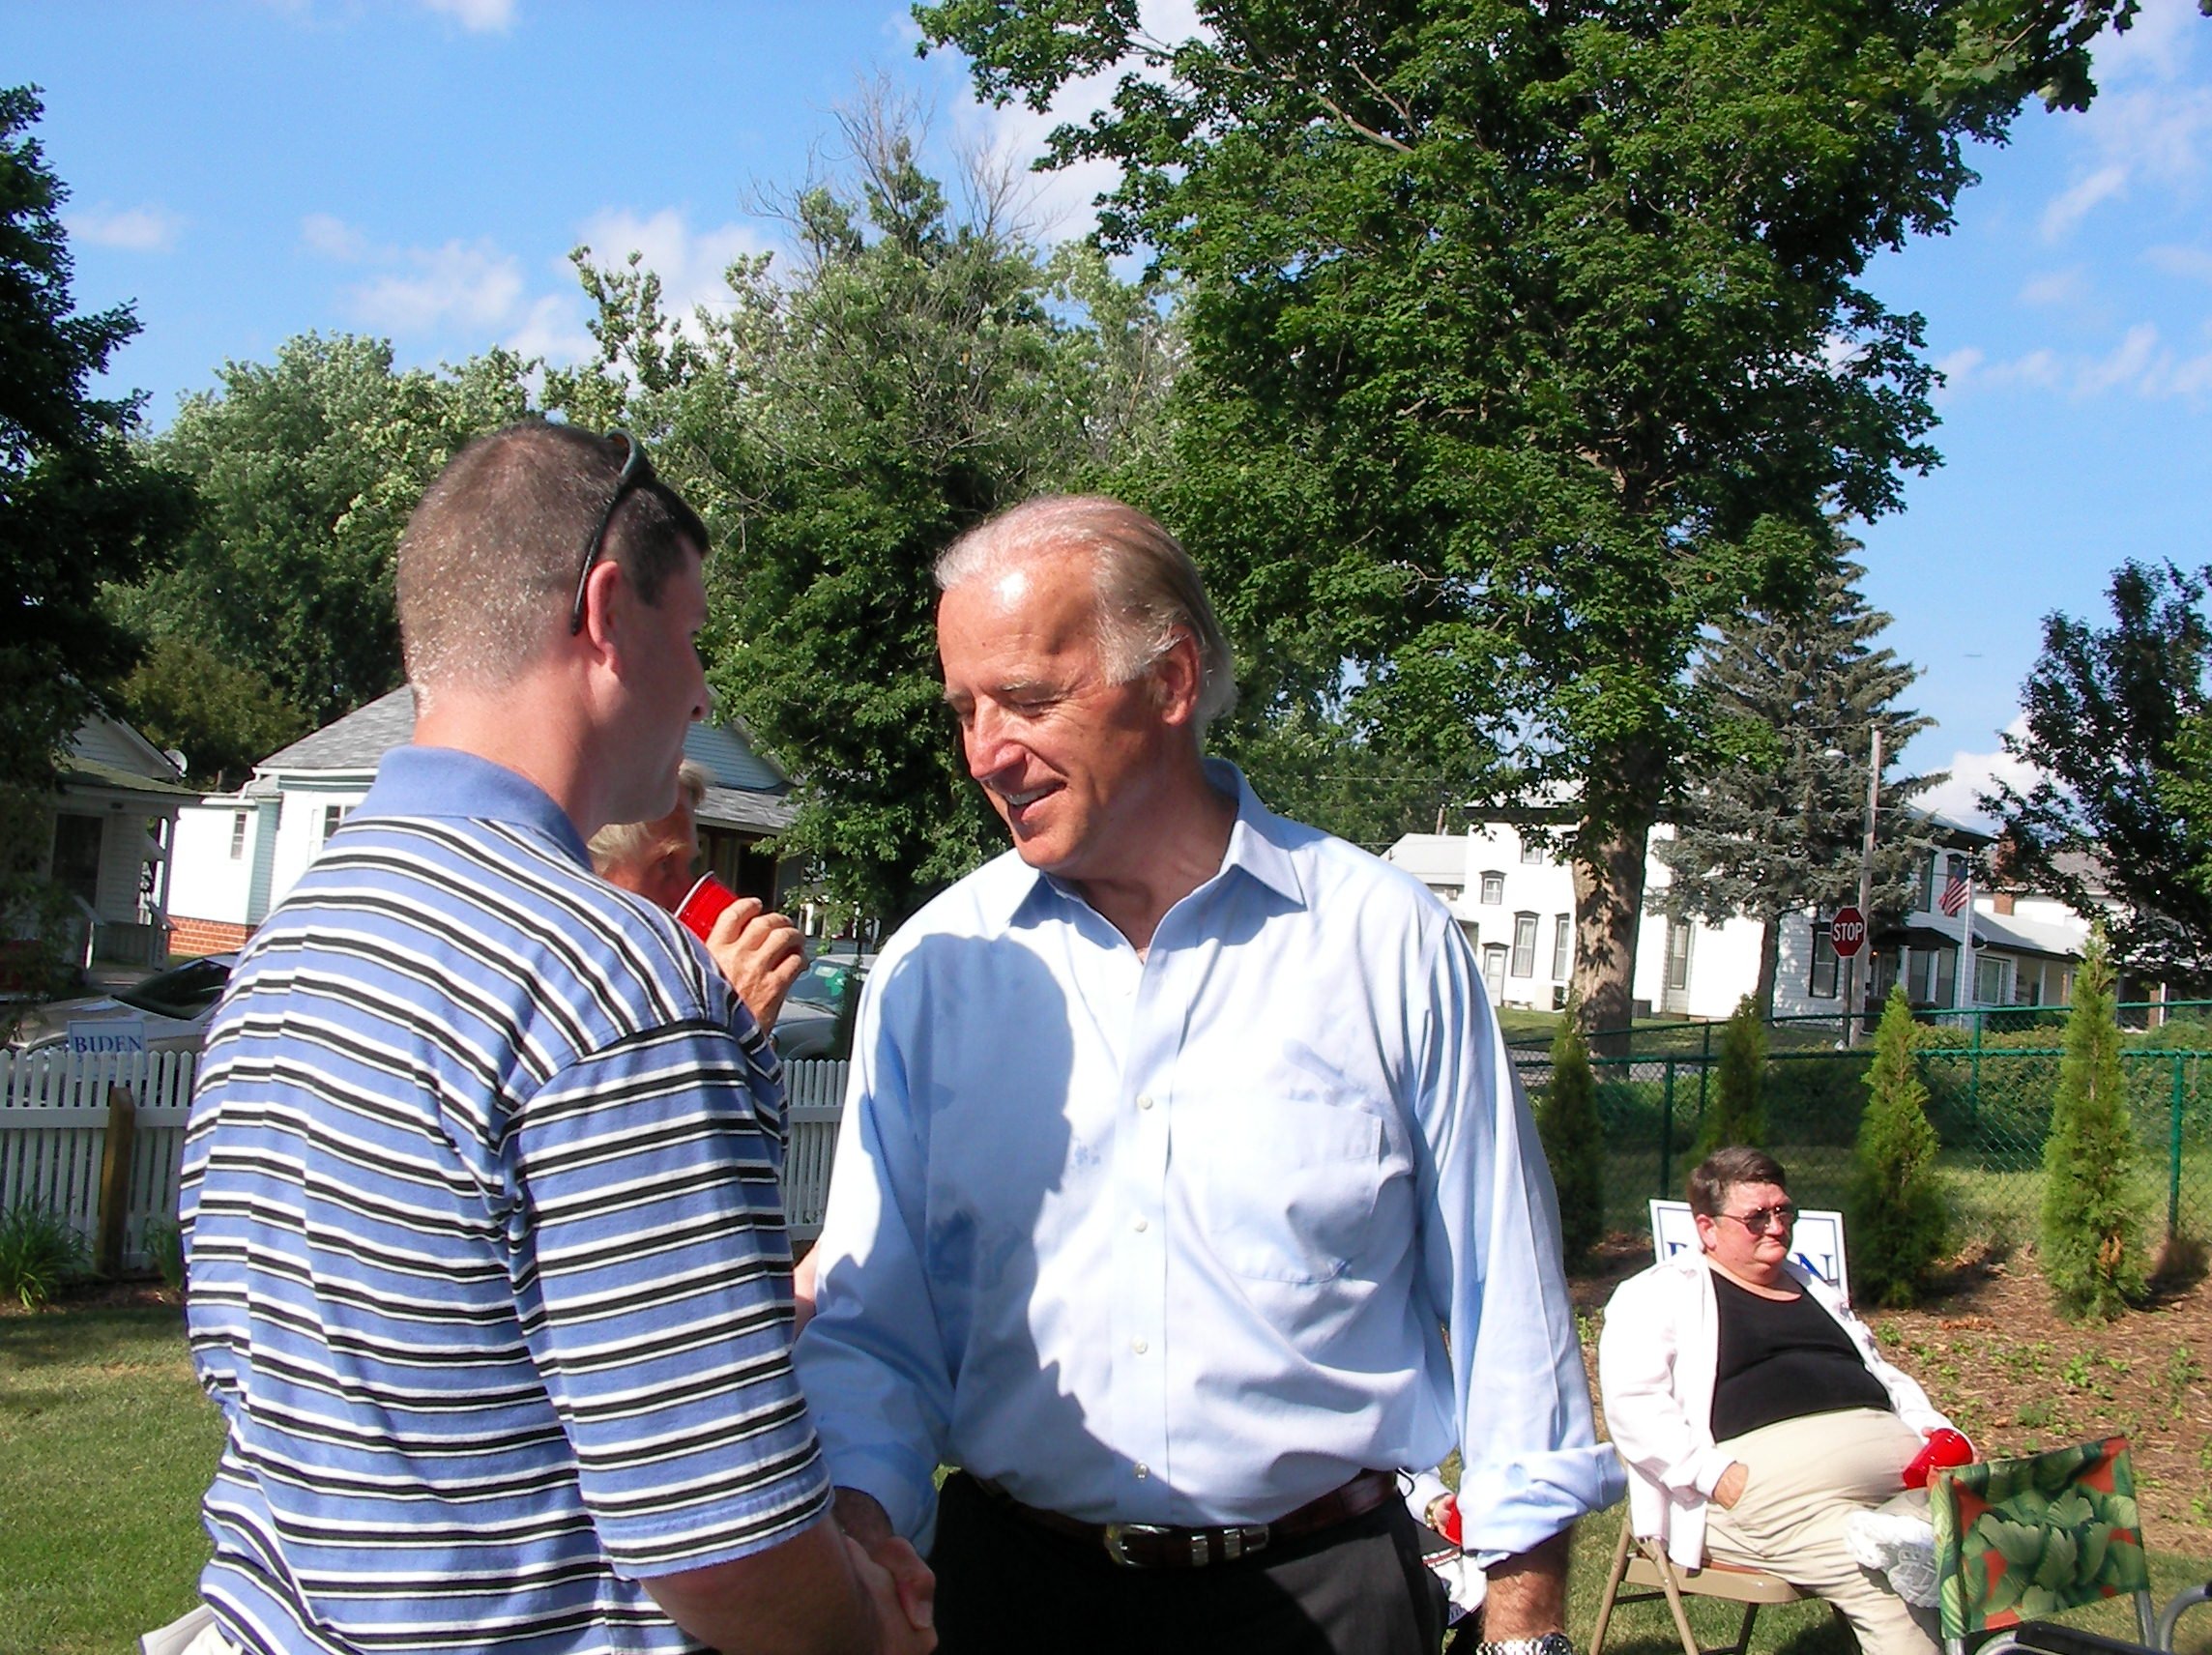 Sen. Joe Biden, D-Del., campaigns for president at a July 3 house party in Creston. Creative Commons IowaPolitics.com